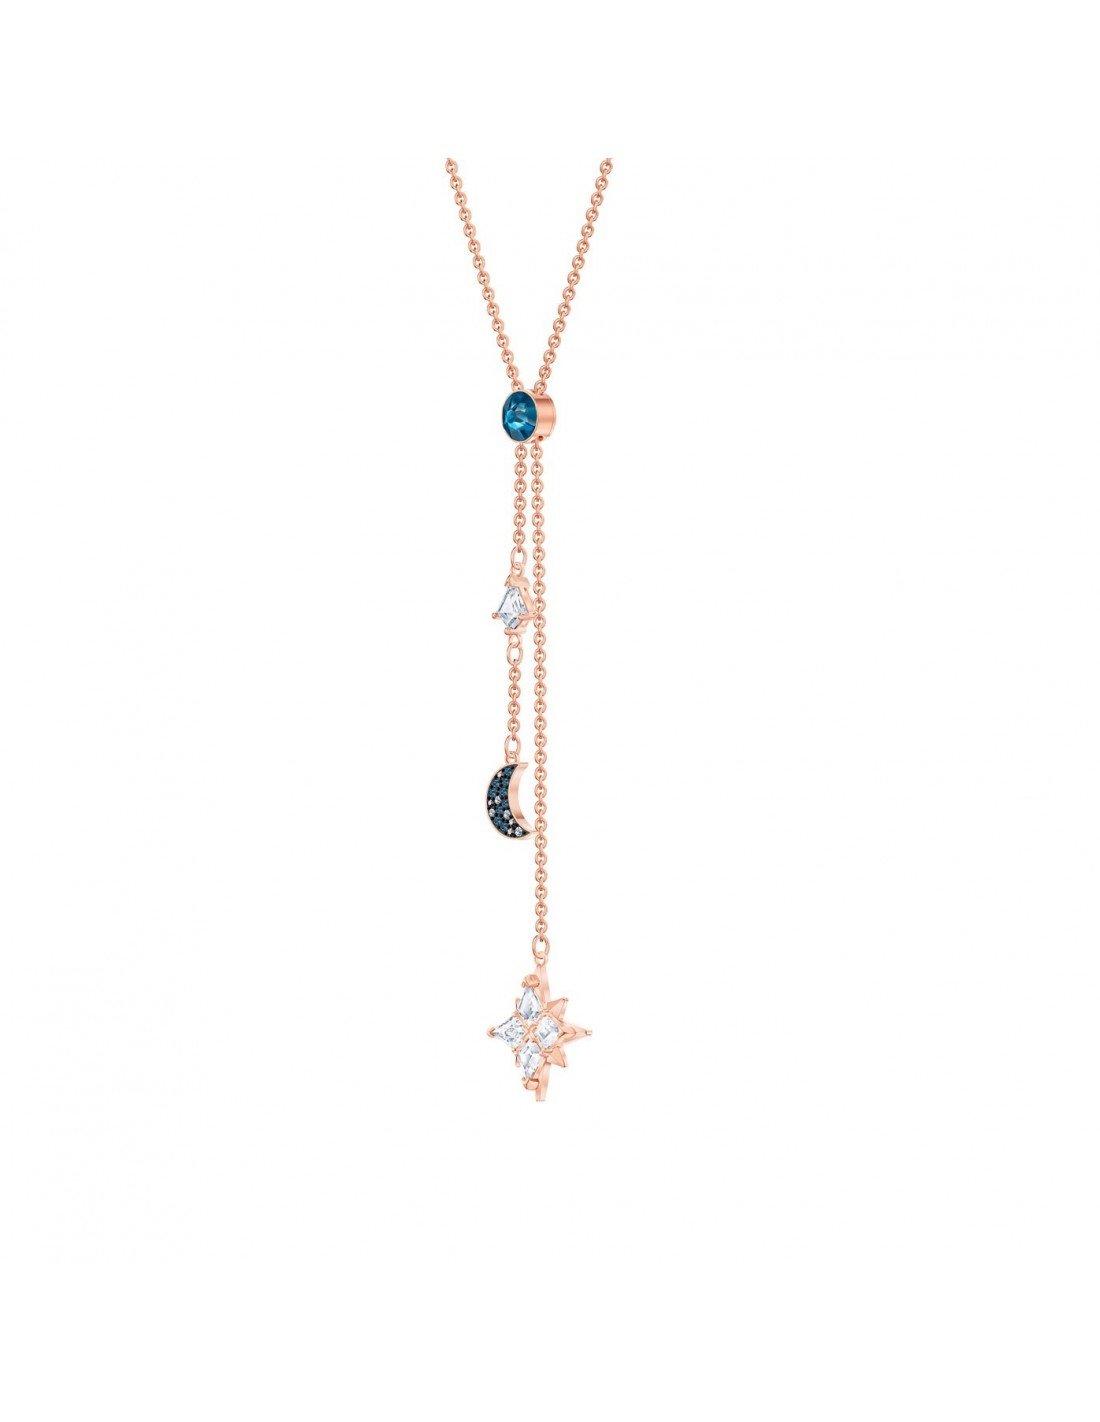 SWAROVSKI Symbolic Y Necklace - Multi-colored & Rose-gold tone plated #5494357